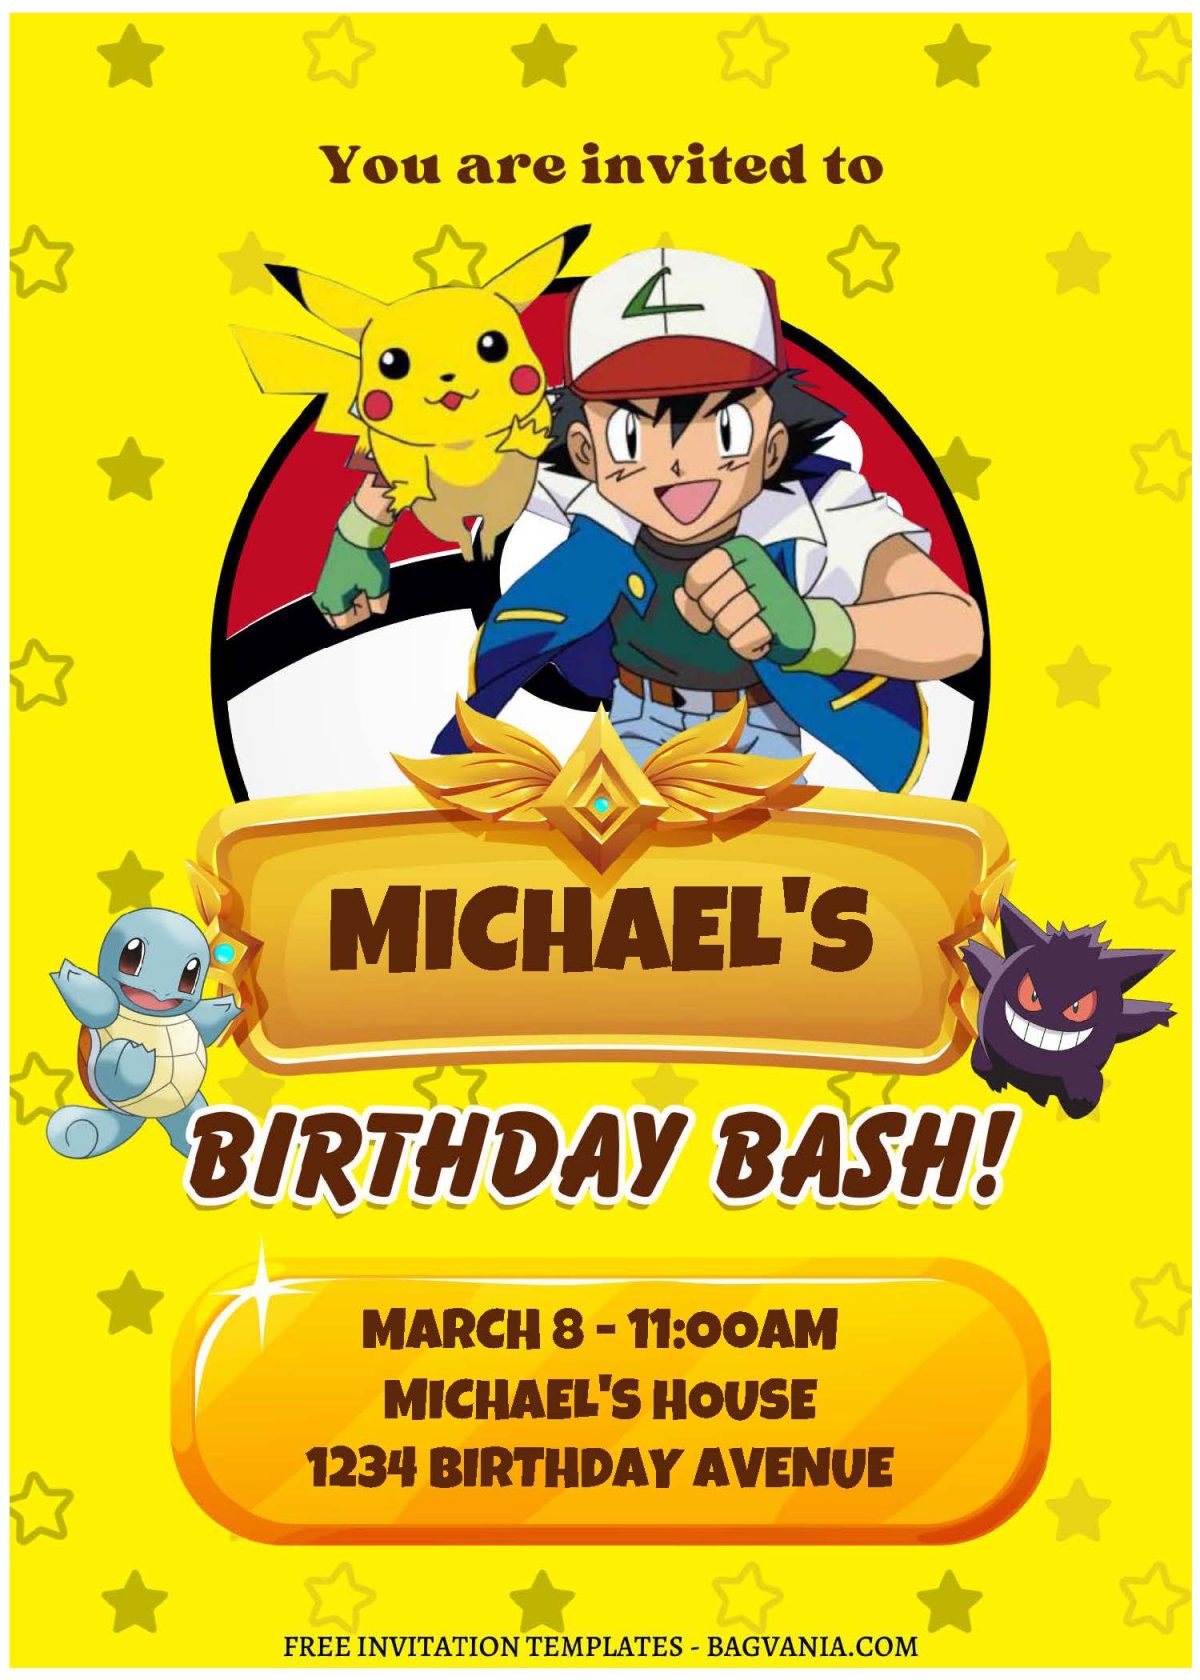 (Free Editable PDF) A Galaxy Of Fun Pokemon Themed Birthday Invitation Templates with Ash and Pikachu